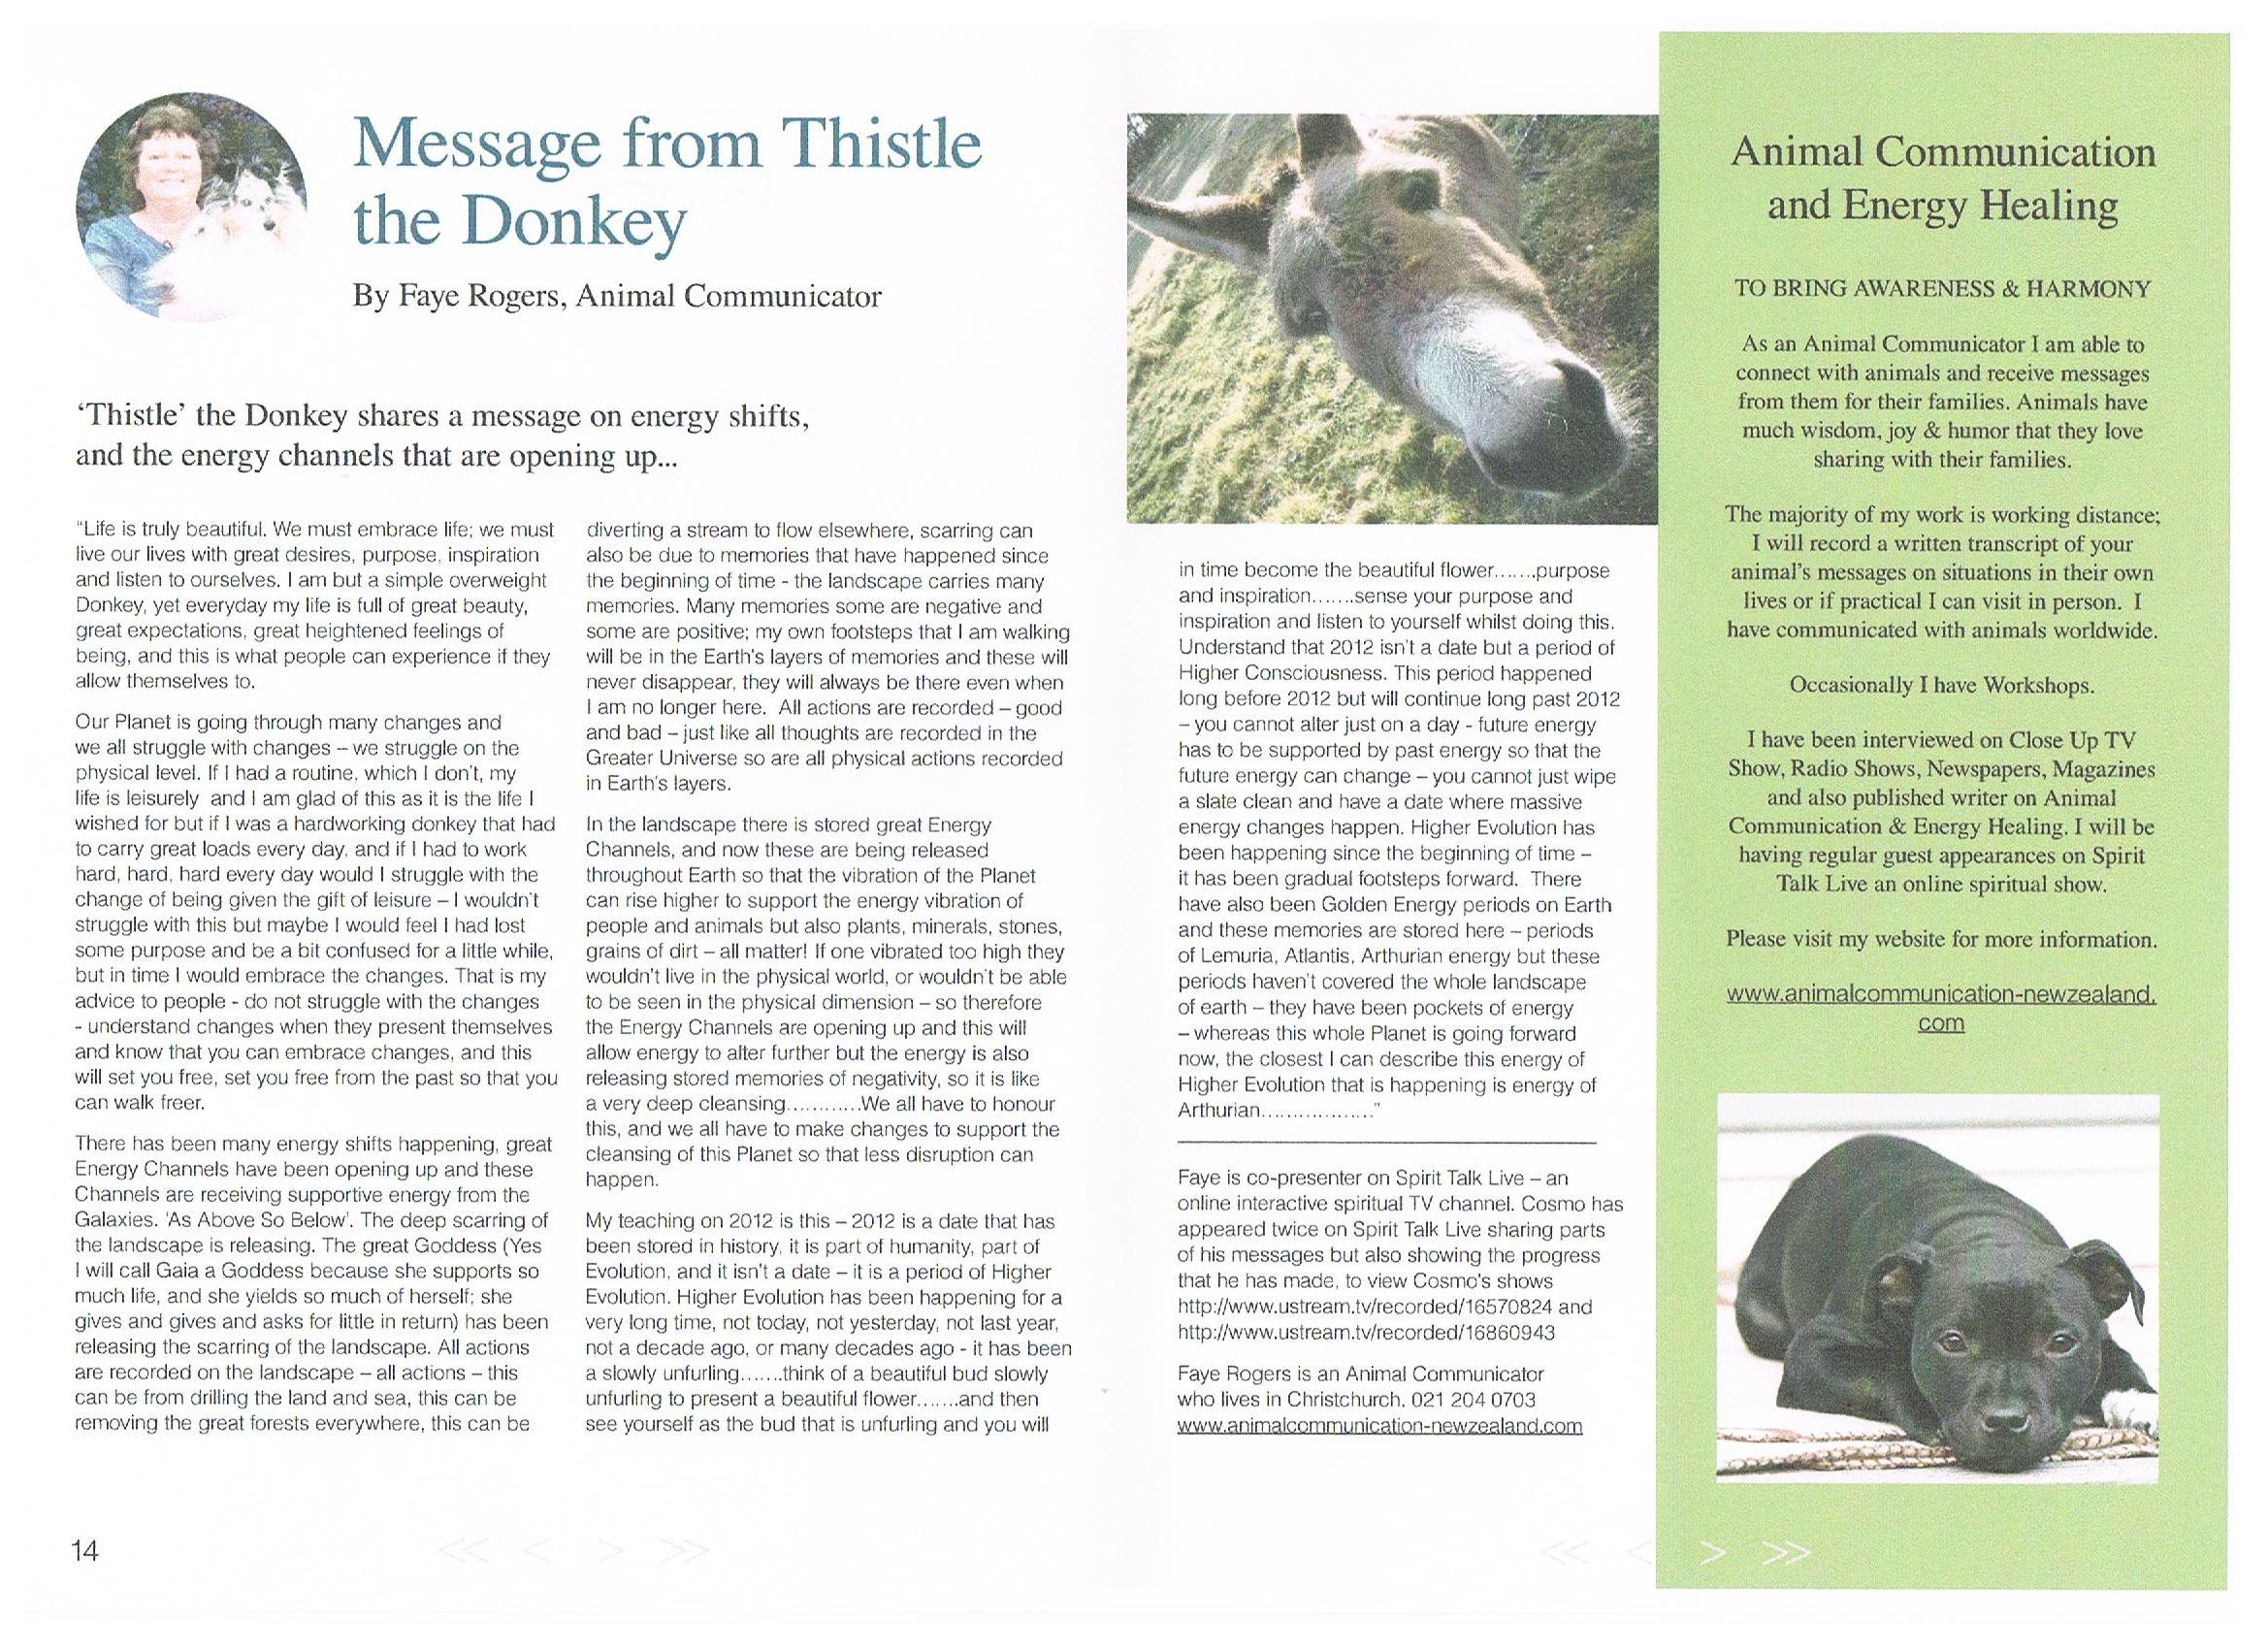 Into Light Magazine - July 2012 - Message from Thistle the Donkey - Faye  Rogers - Animal Communication - New Zealand